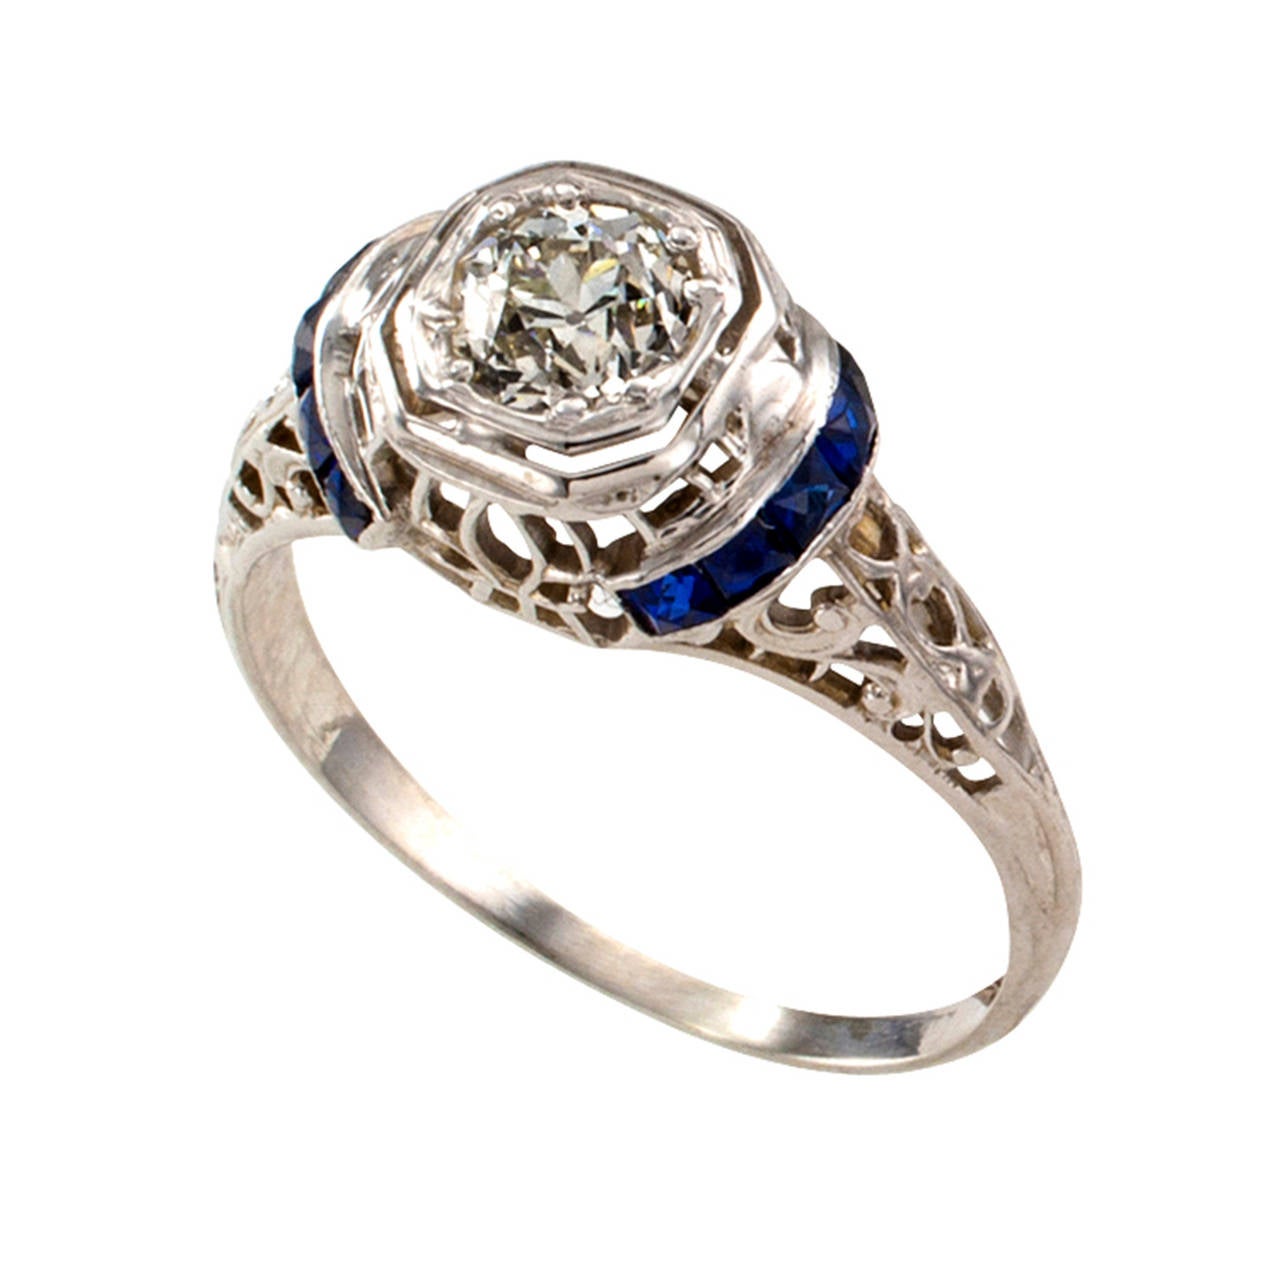 Women's Art Deco Engagement Ring